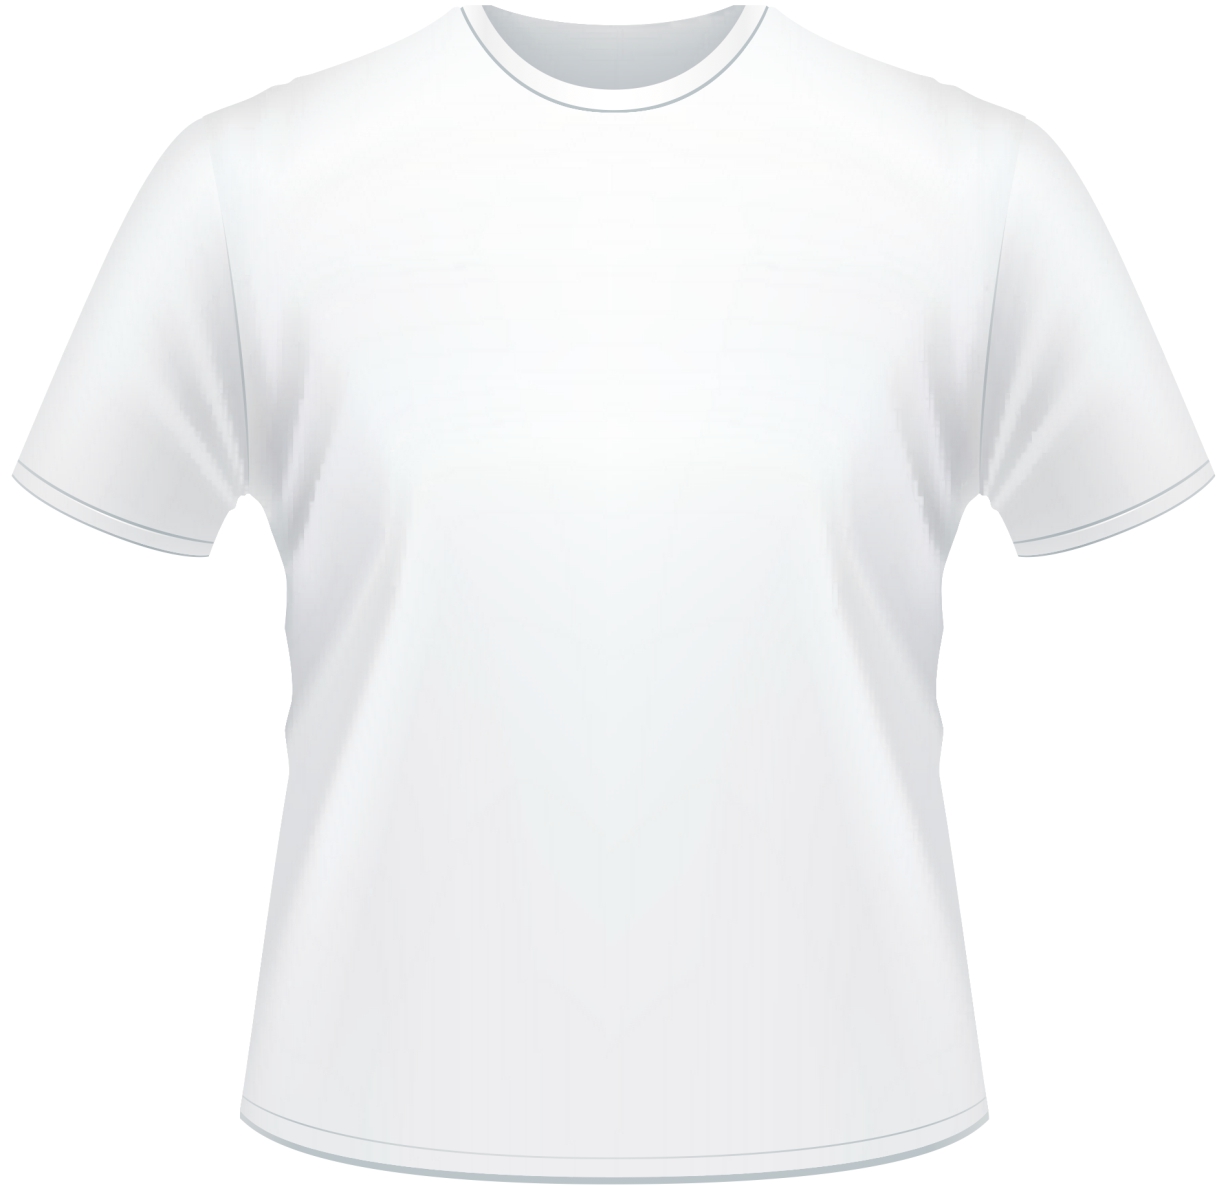 T-Shirt with Full Color Print • TShirt Printing